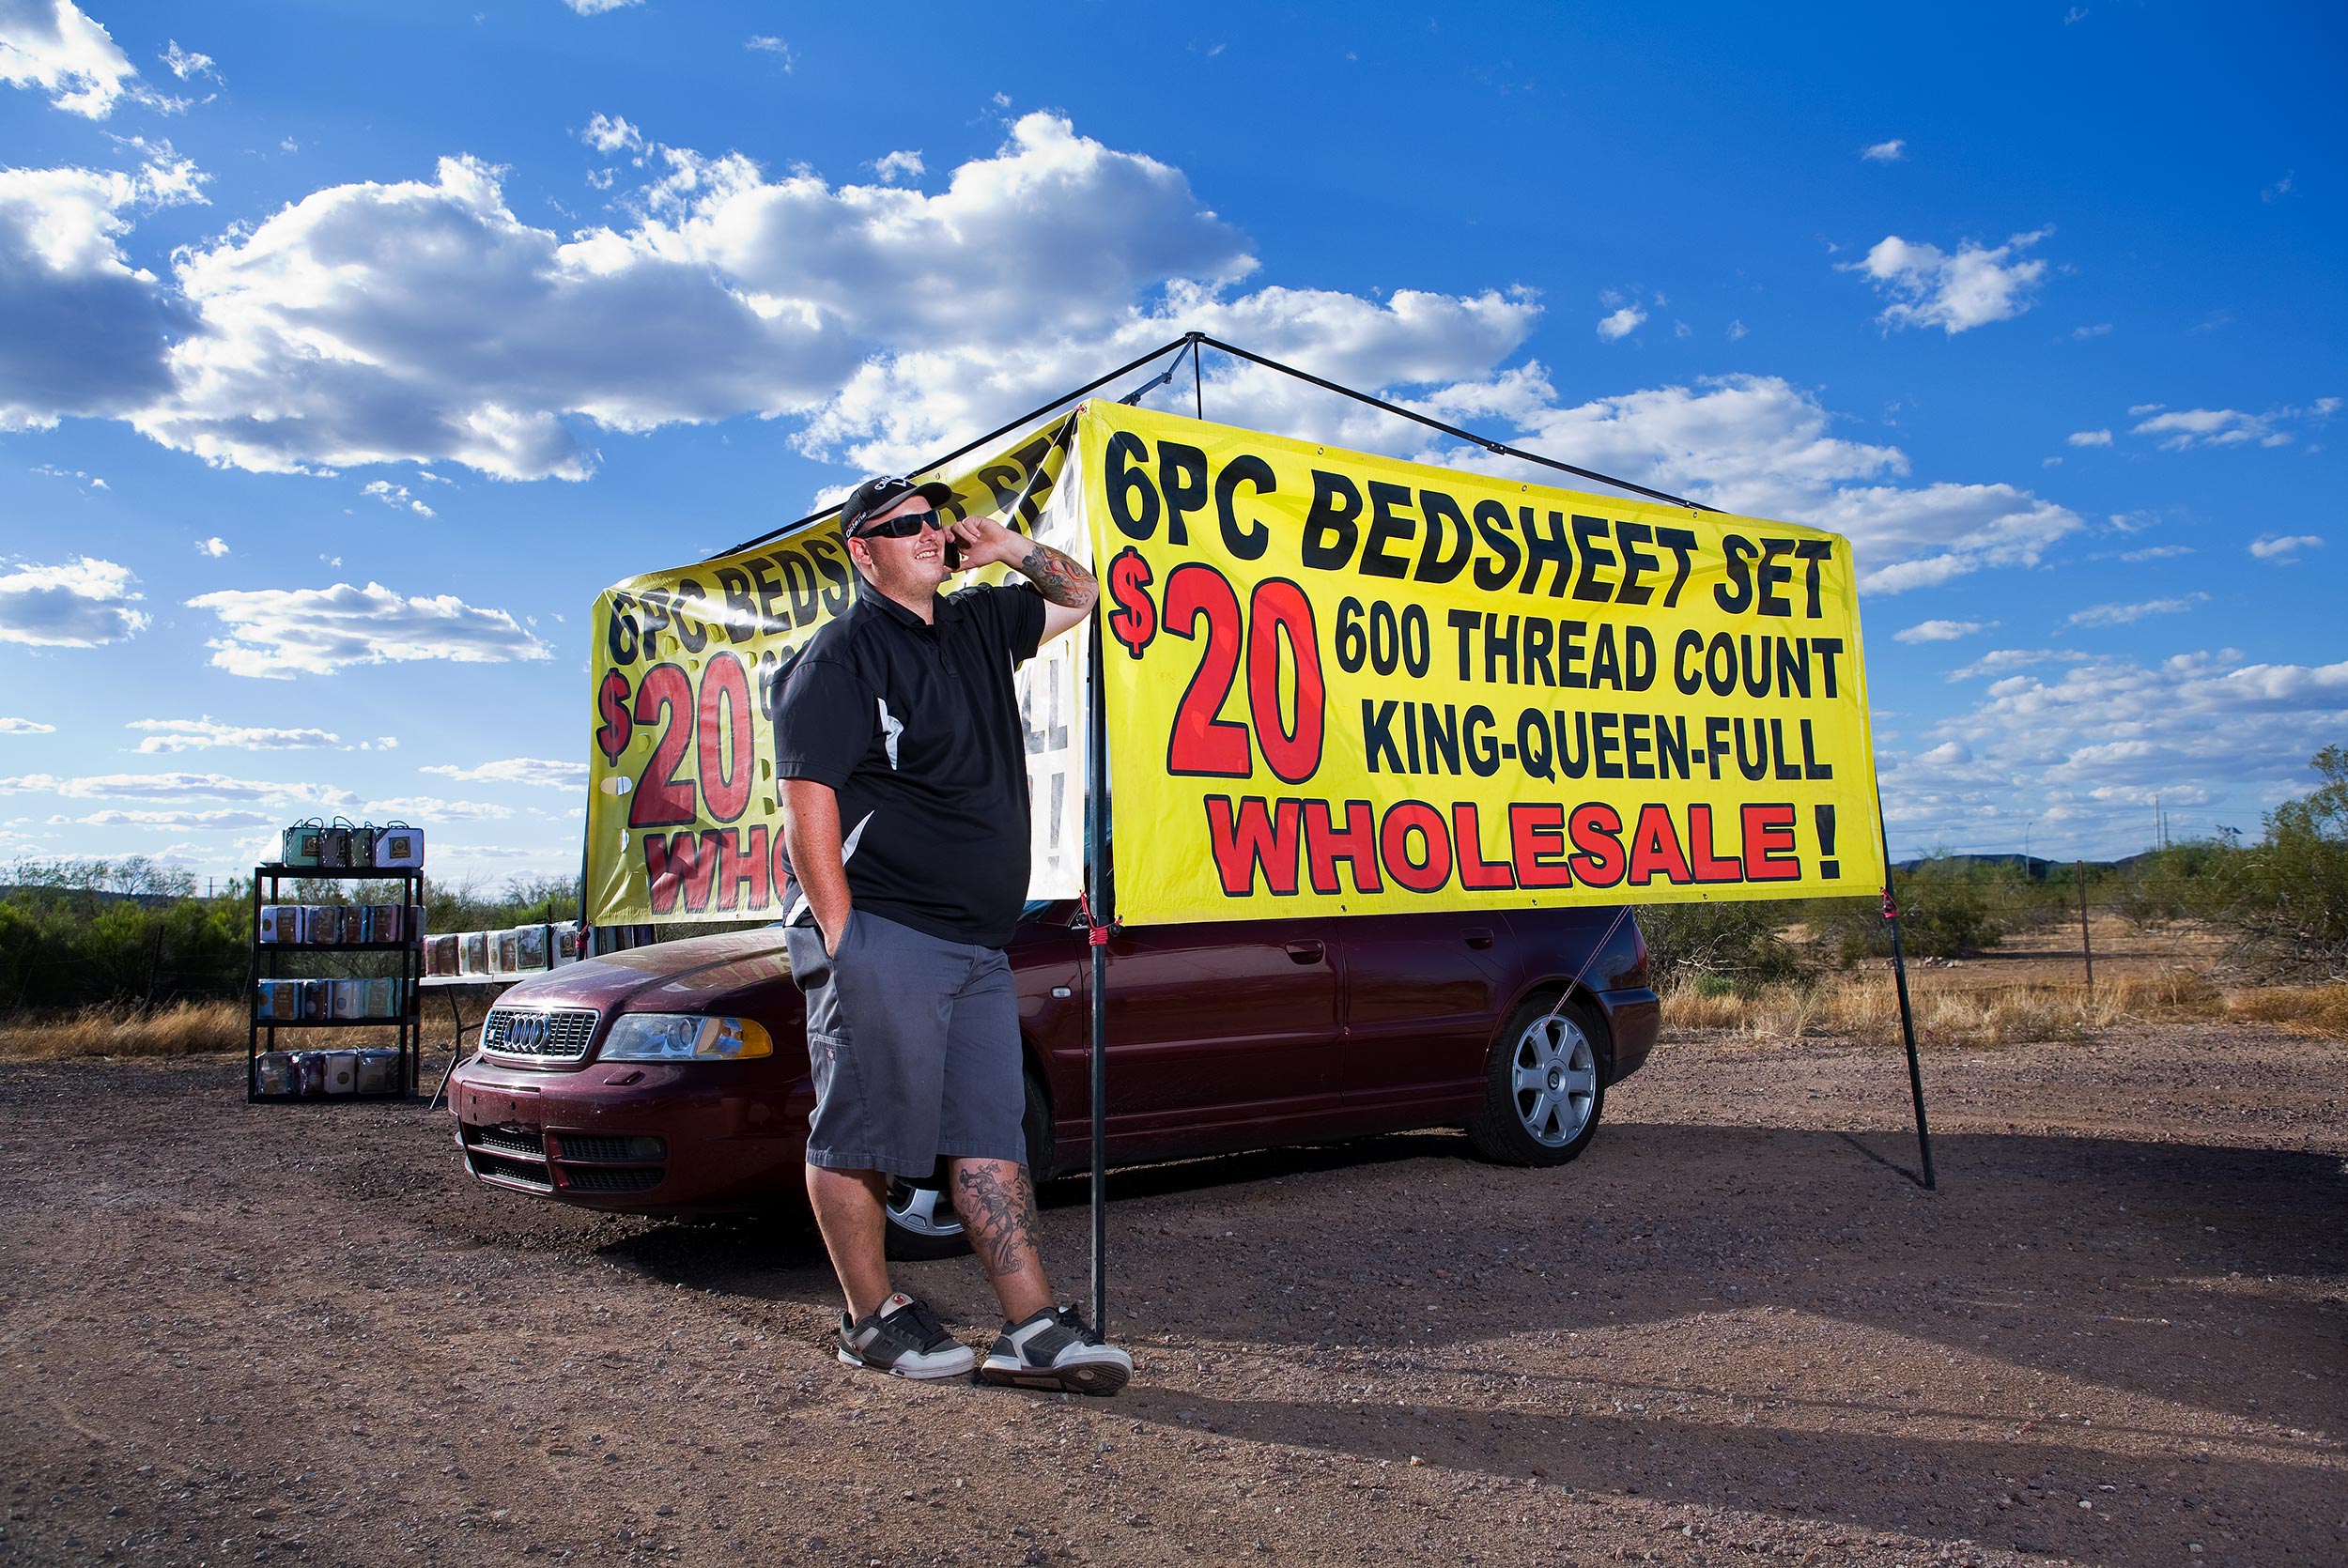 Bedsheets - Steve Craft Photo - Assignment Photographer Phoenix Arizona